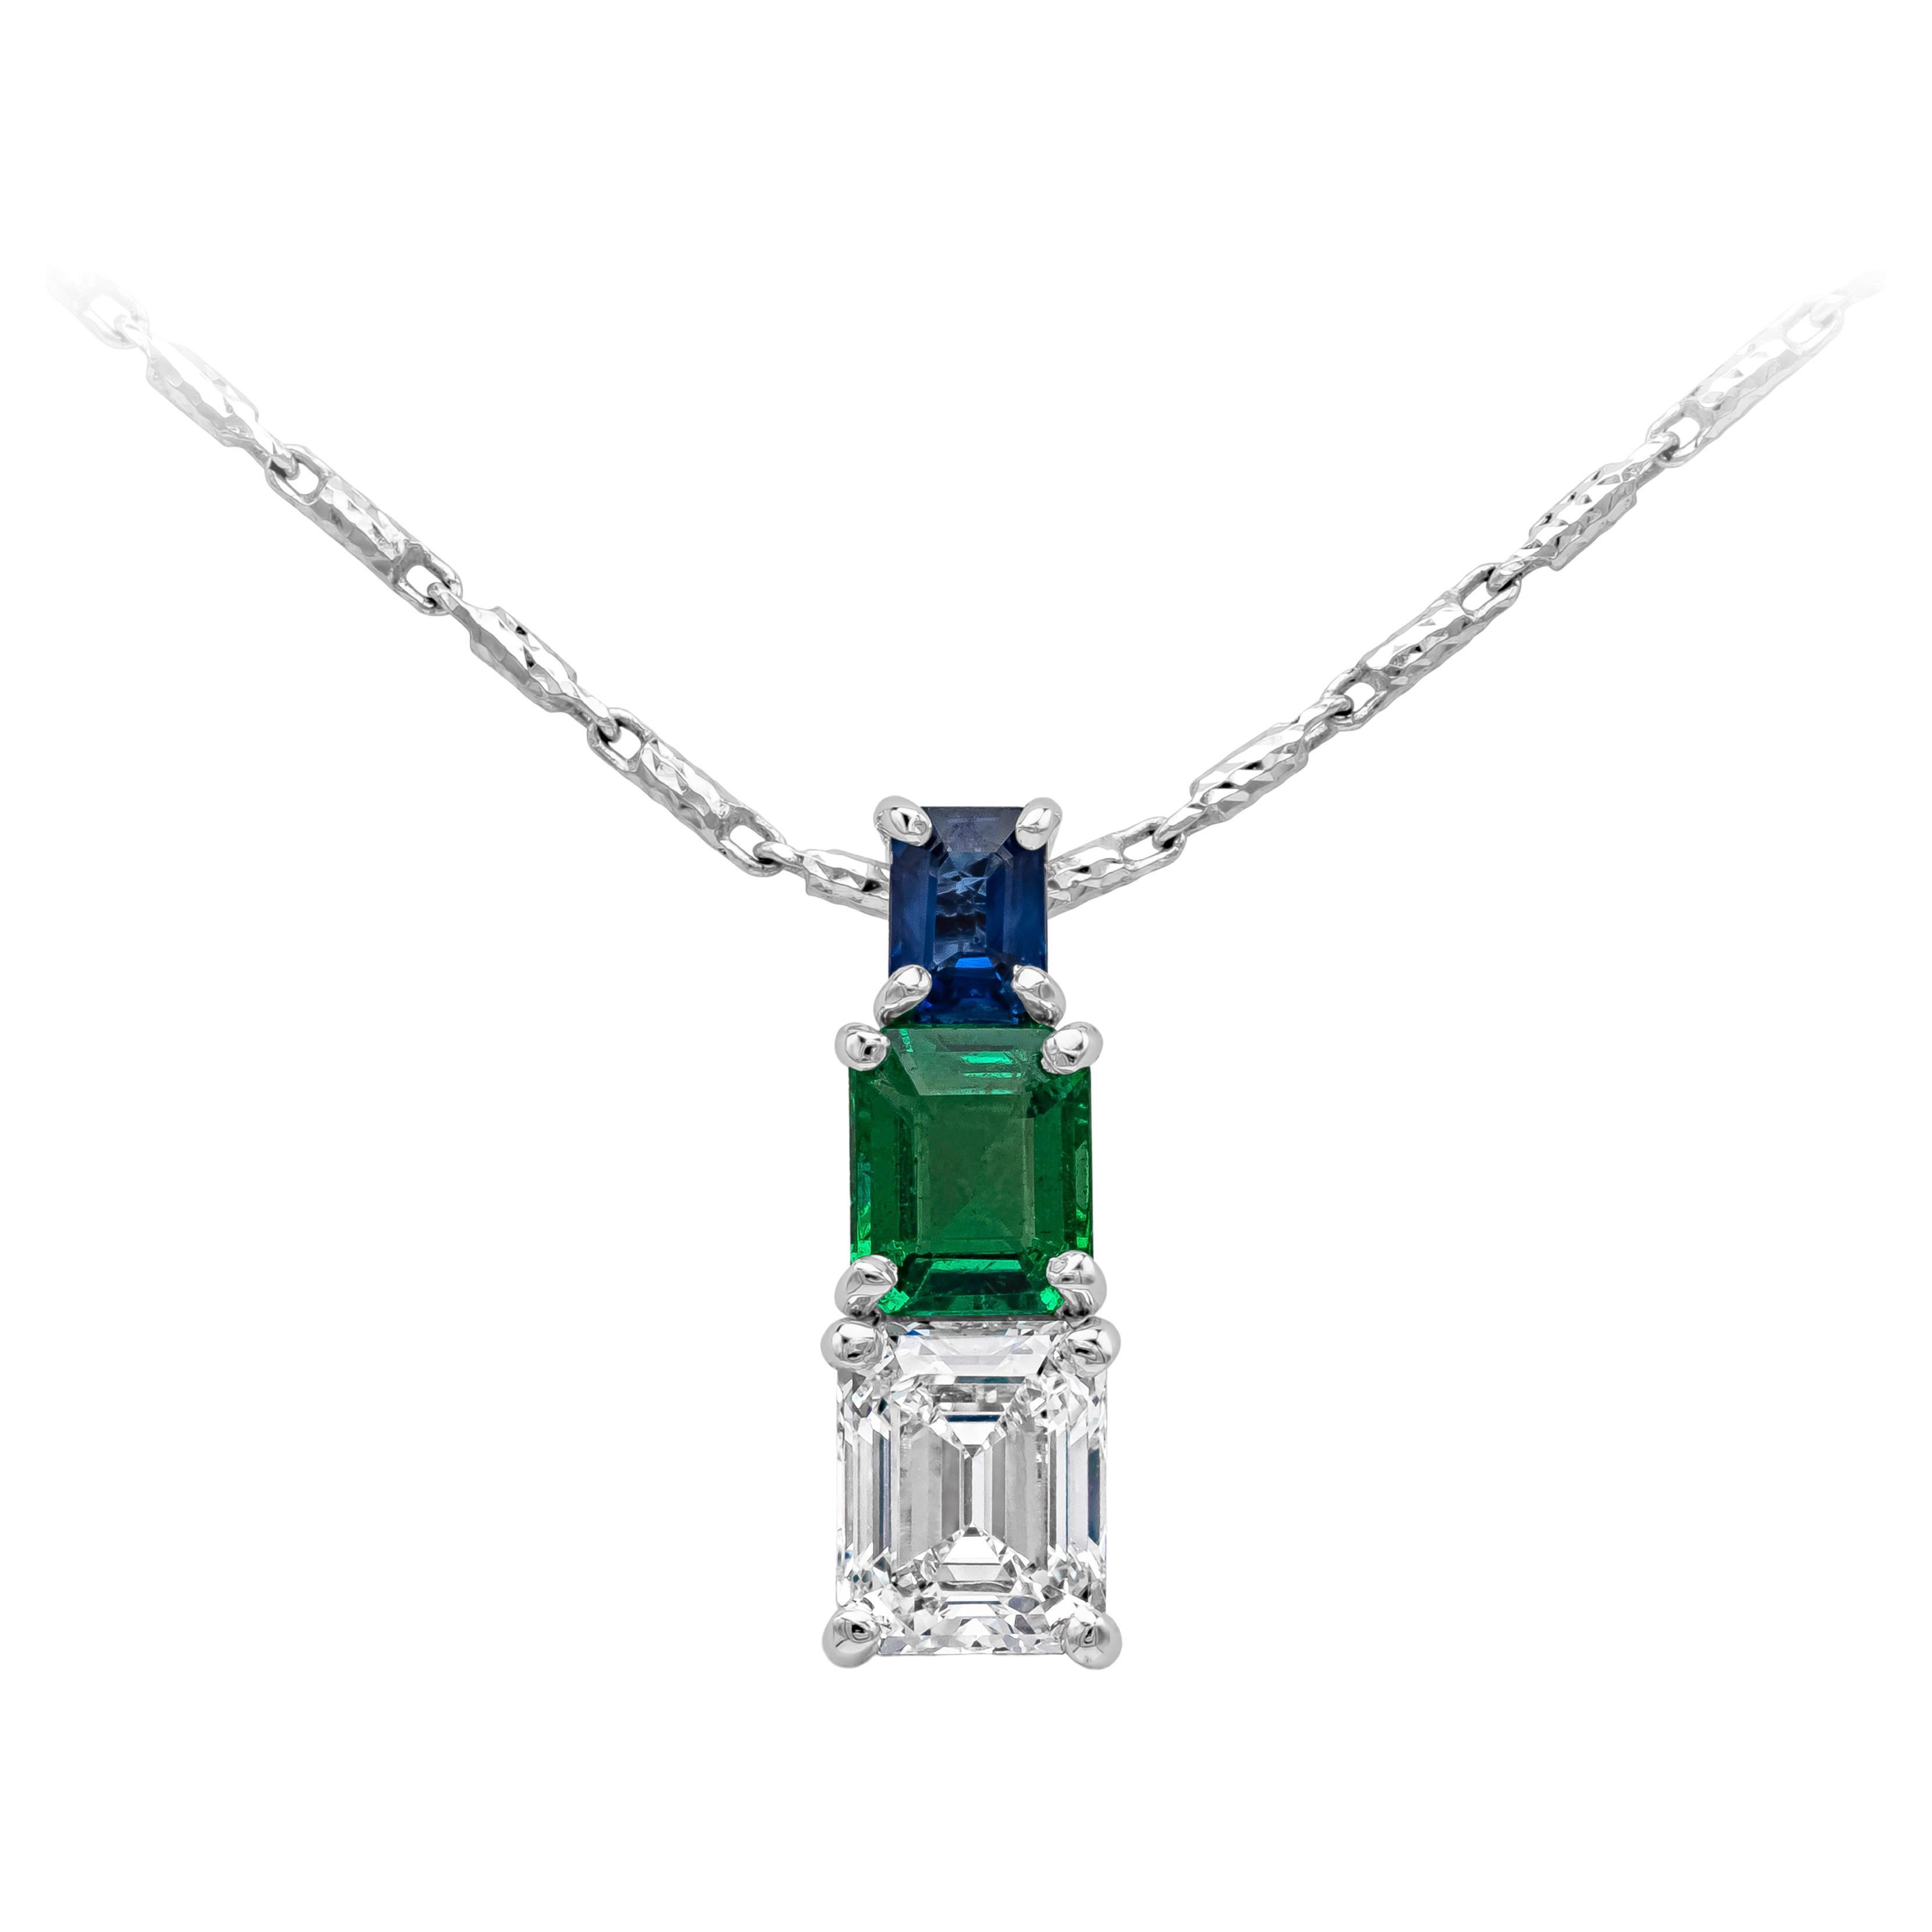 1.46 Carats Total Emerald Cut Emerald, Blue Sapphire & Diamond Pendant Necklace